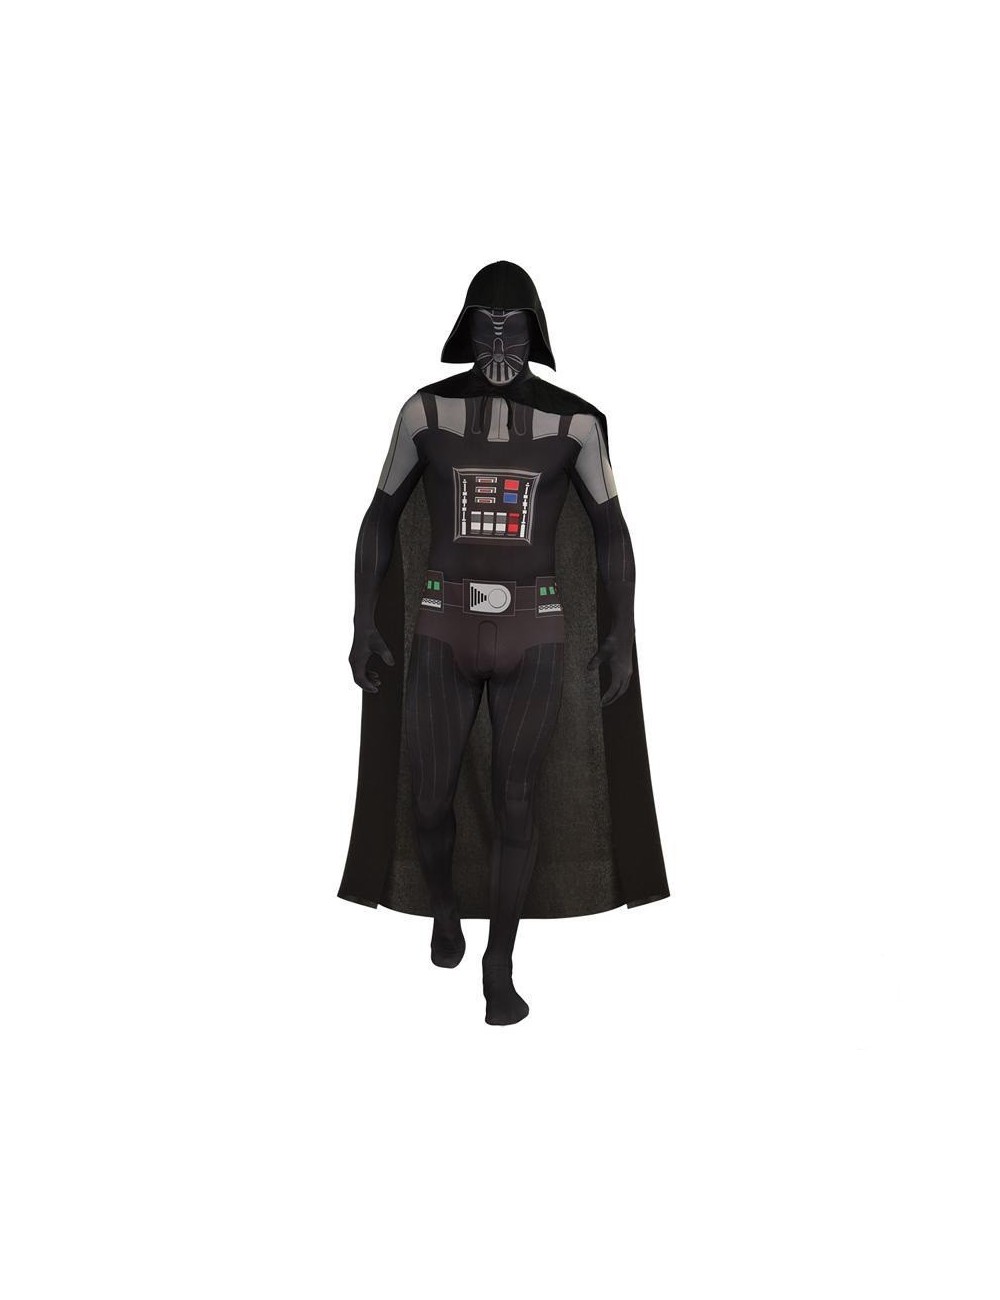 Costum adulti Darth Vader Second skin